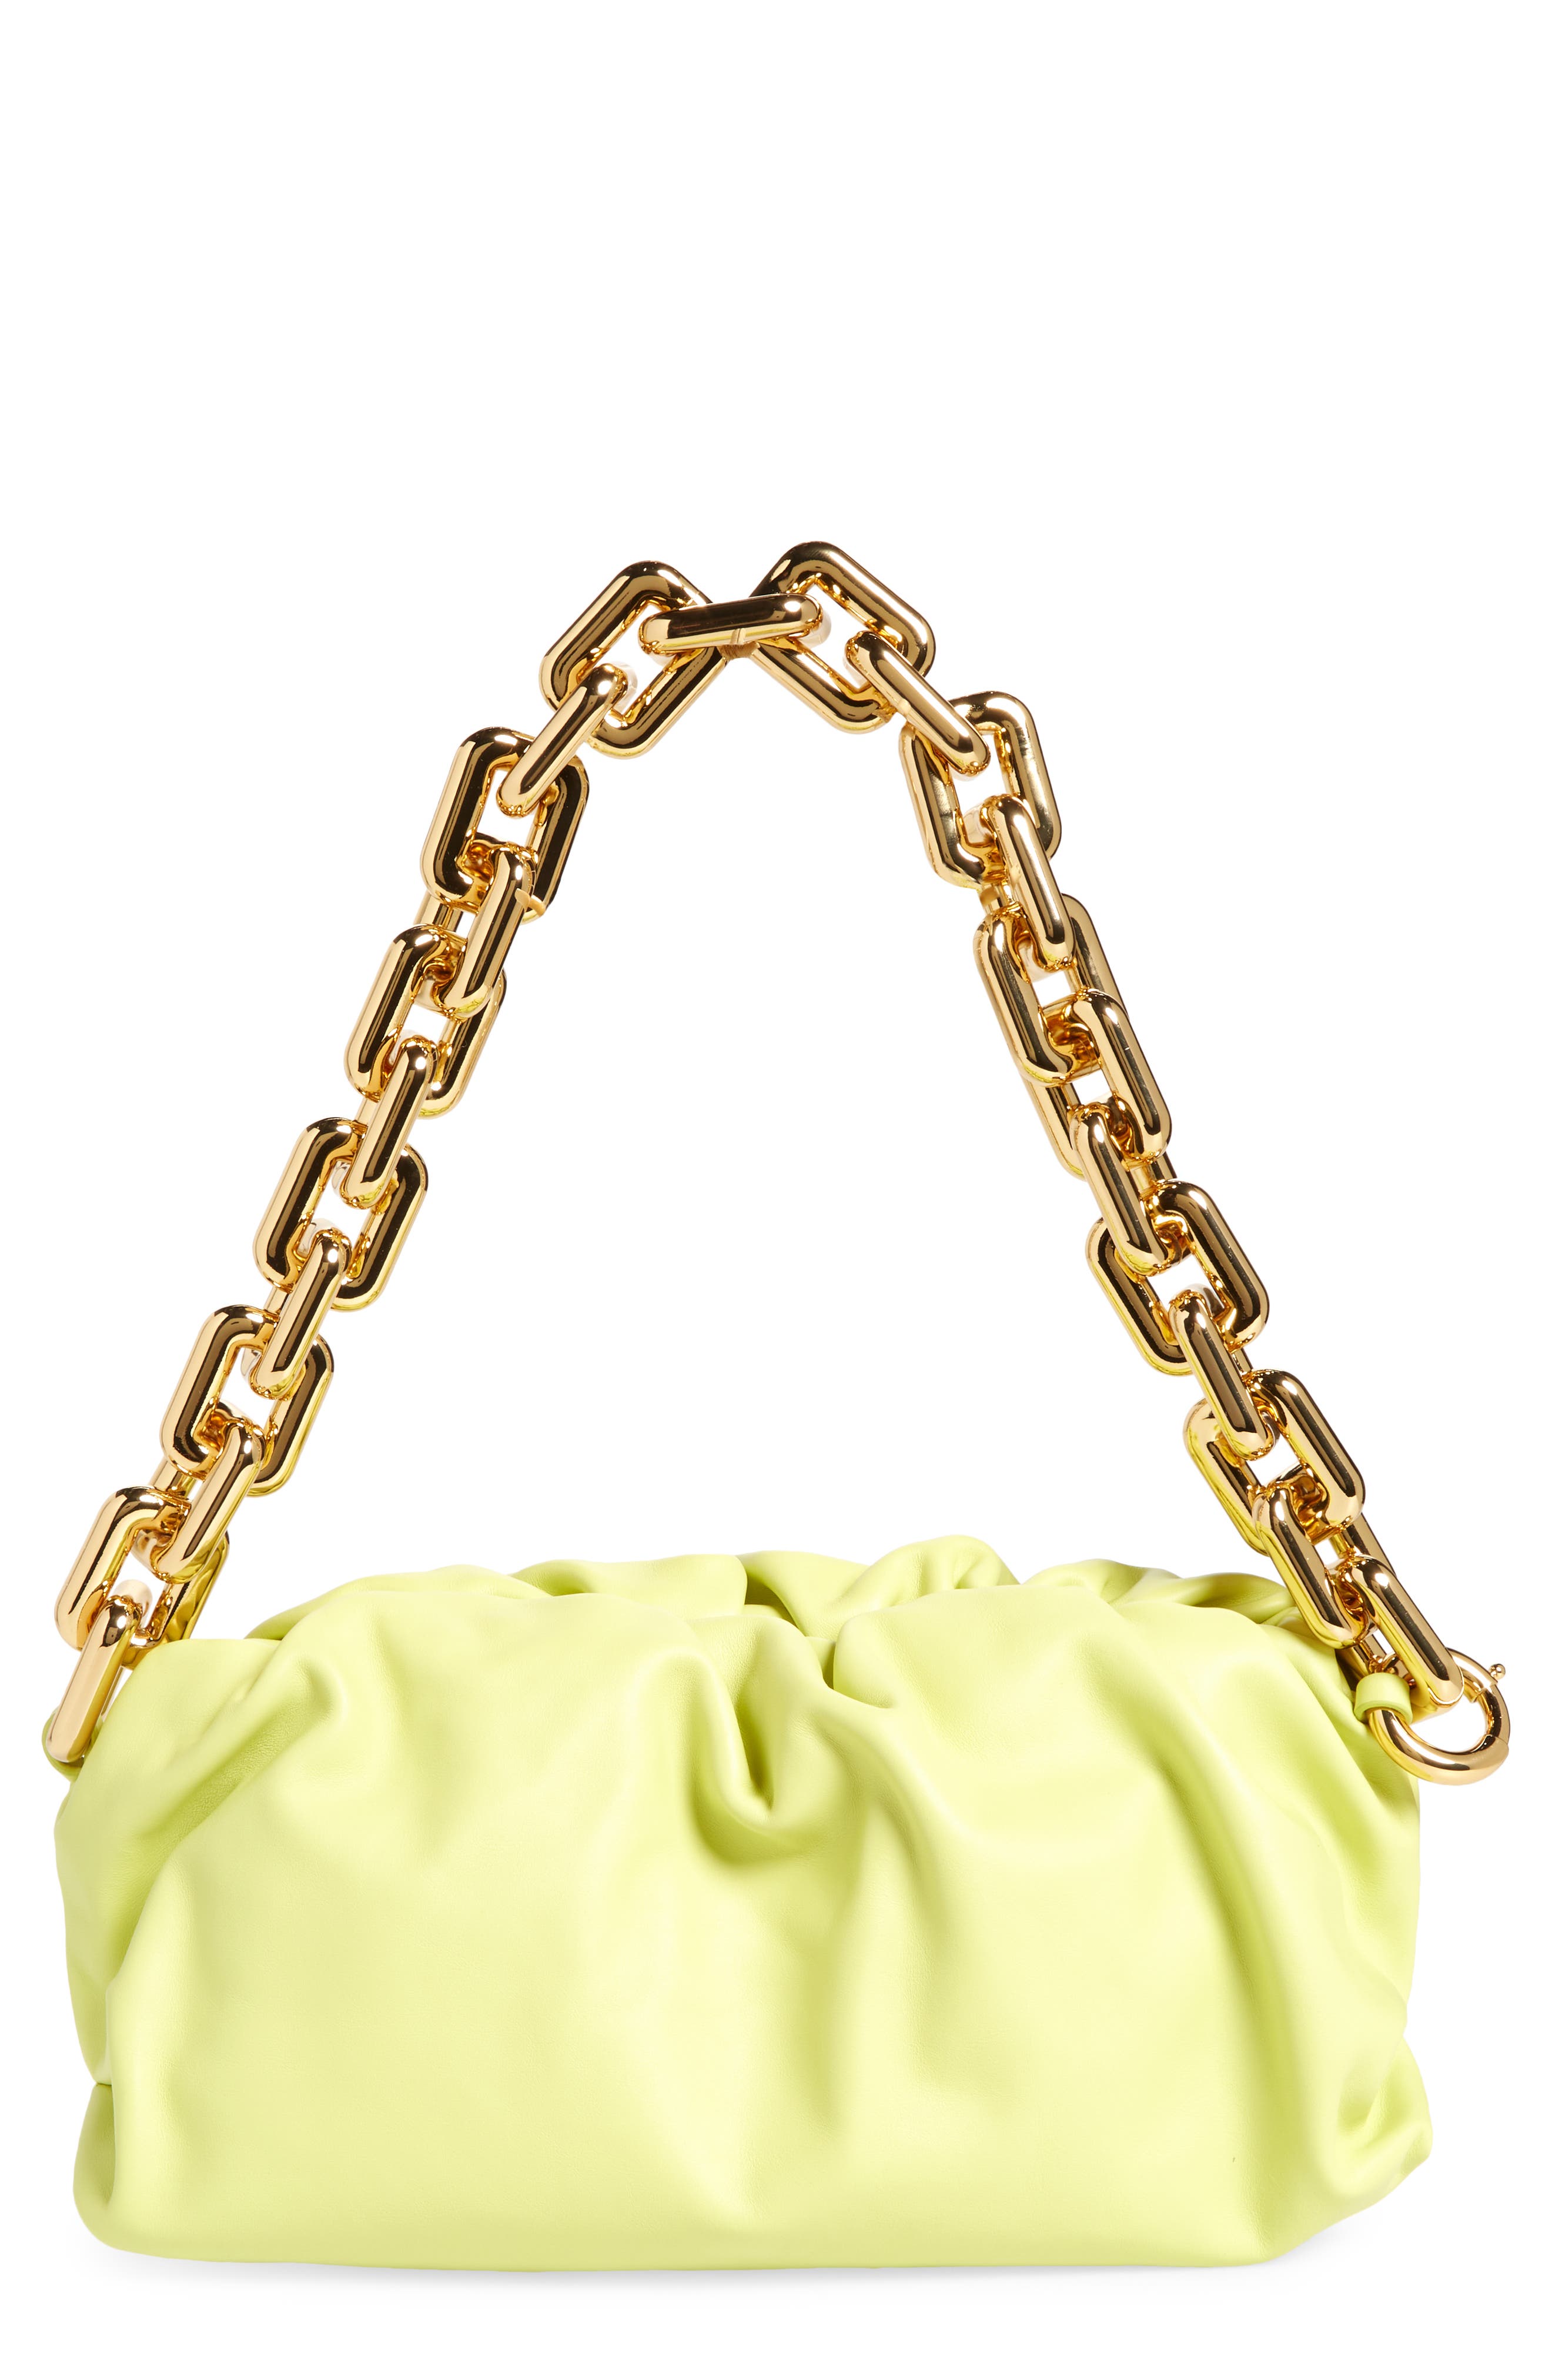 Bottega Veneta The Chain Pouch Leather Shoulder Bag in Seagrass/Gold